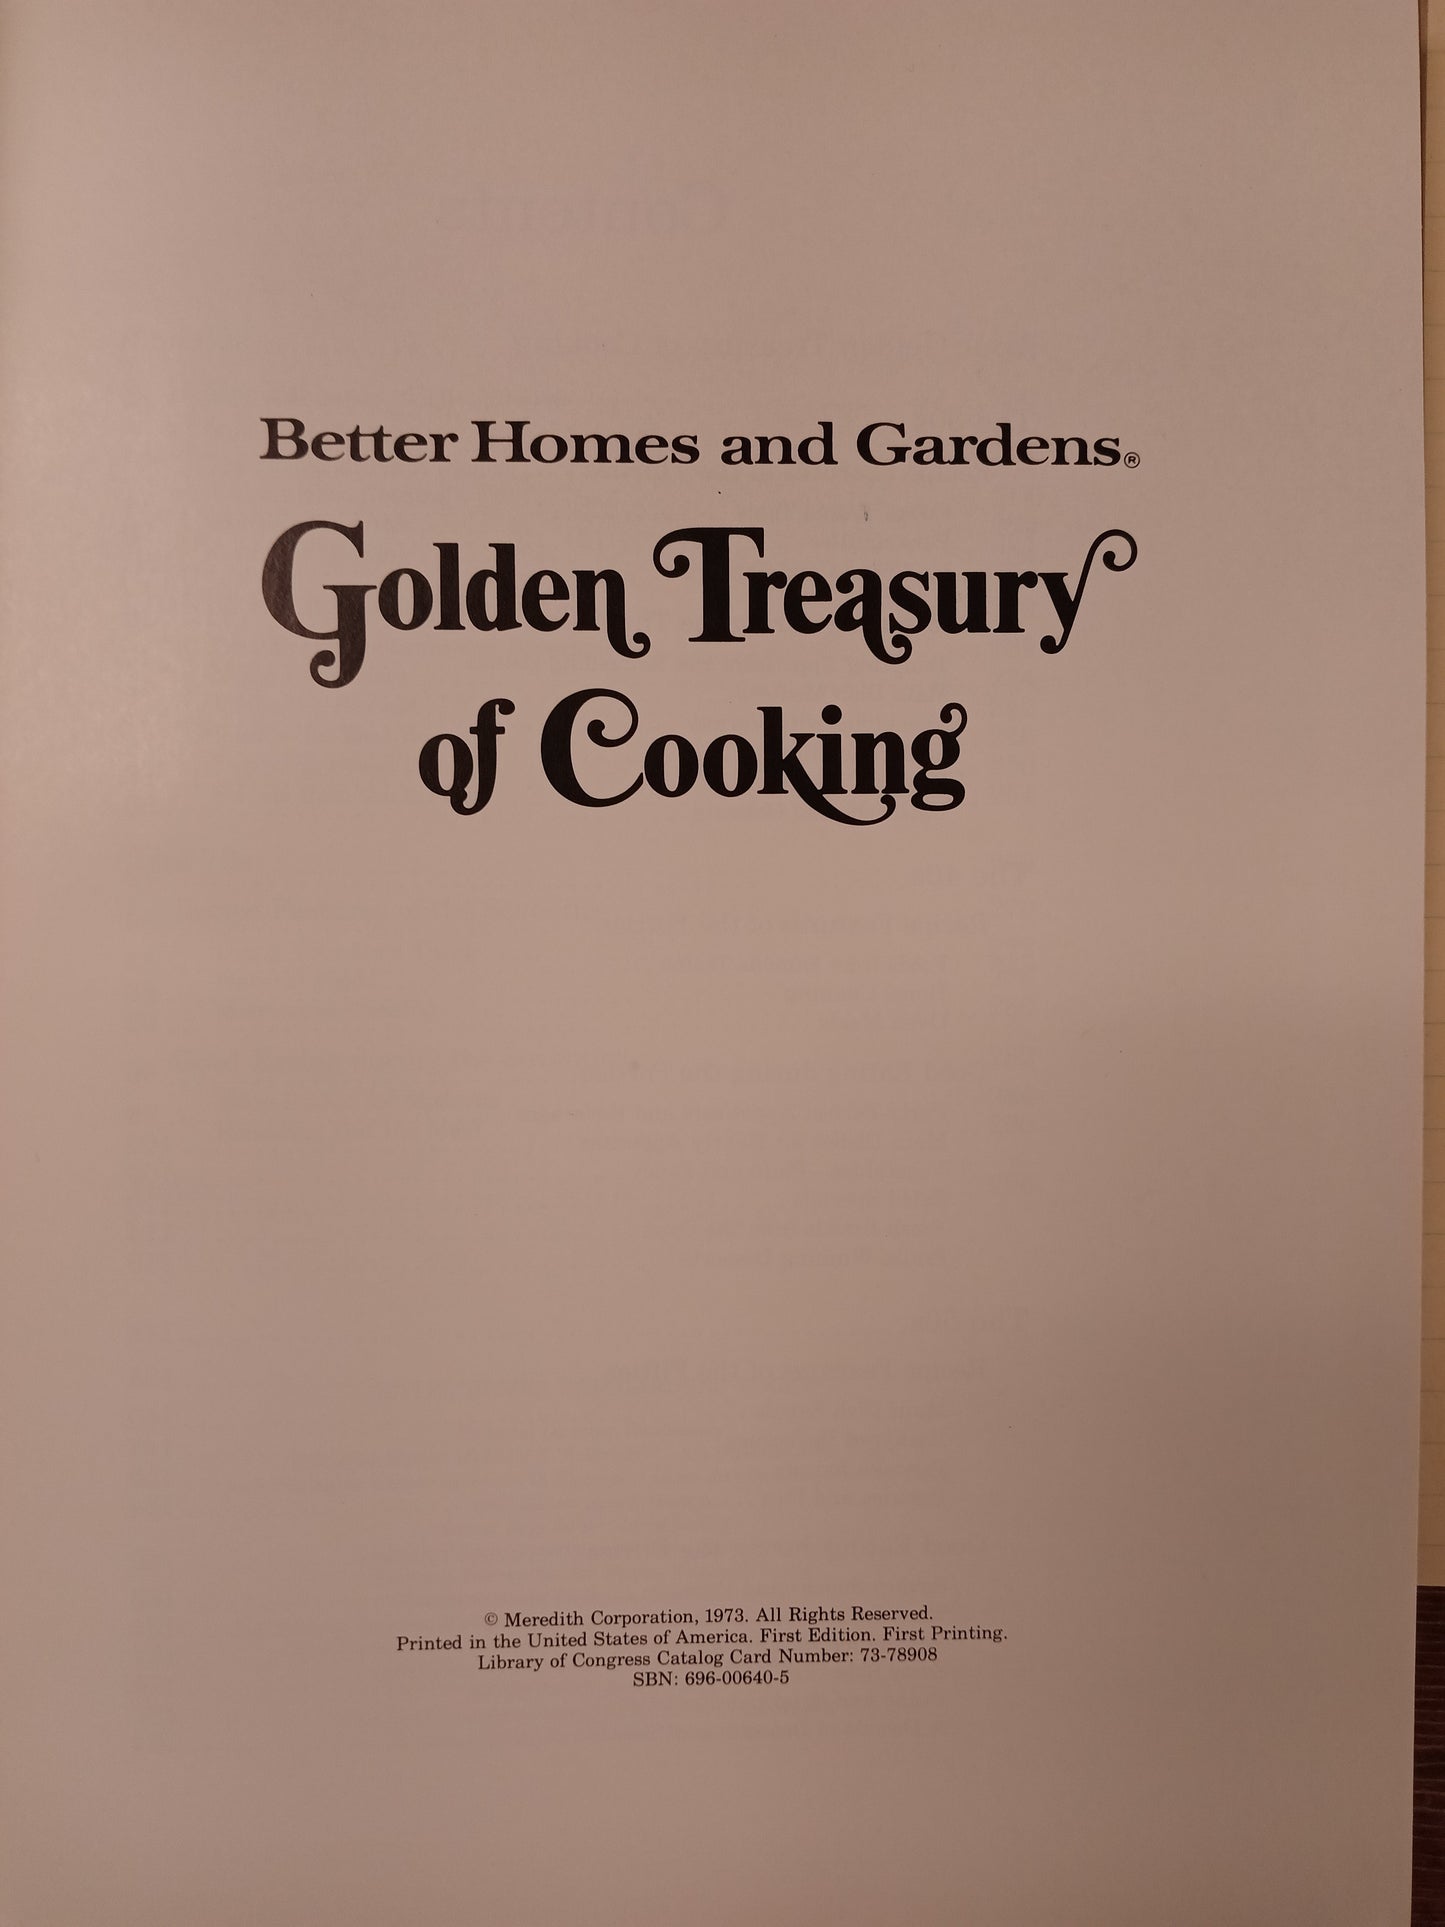 Golden Treasury of Cooking